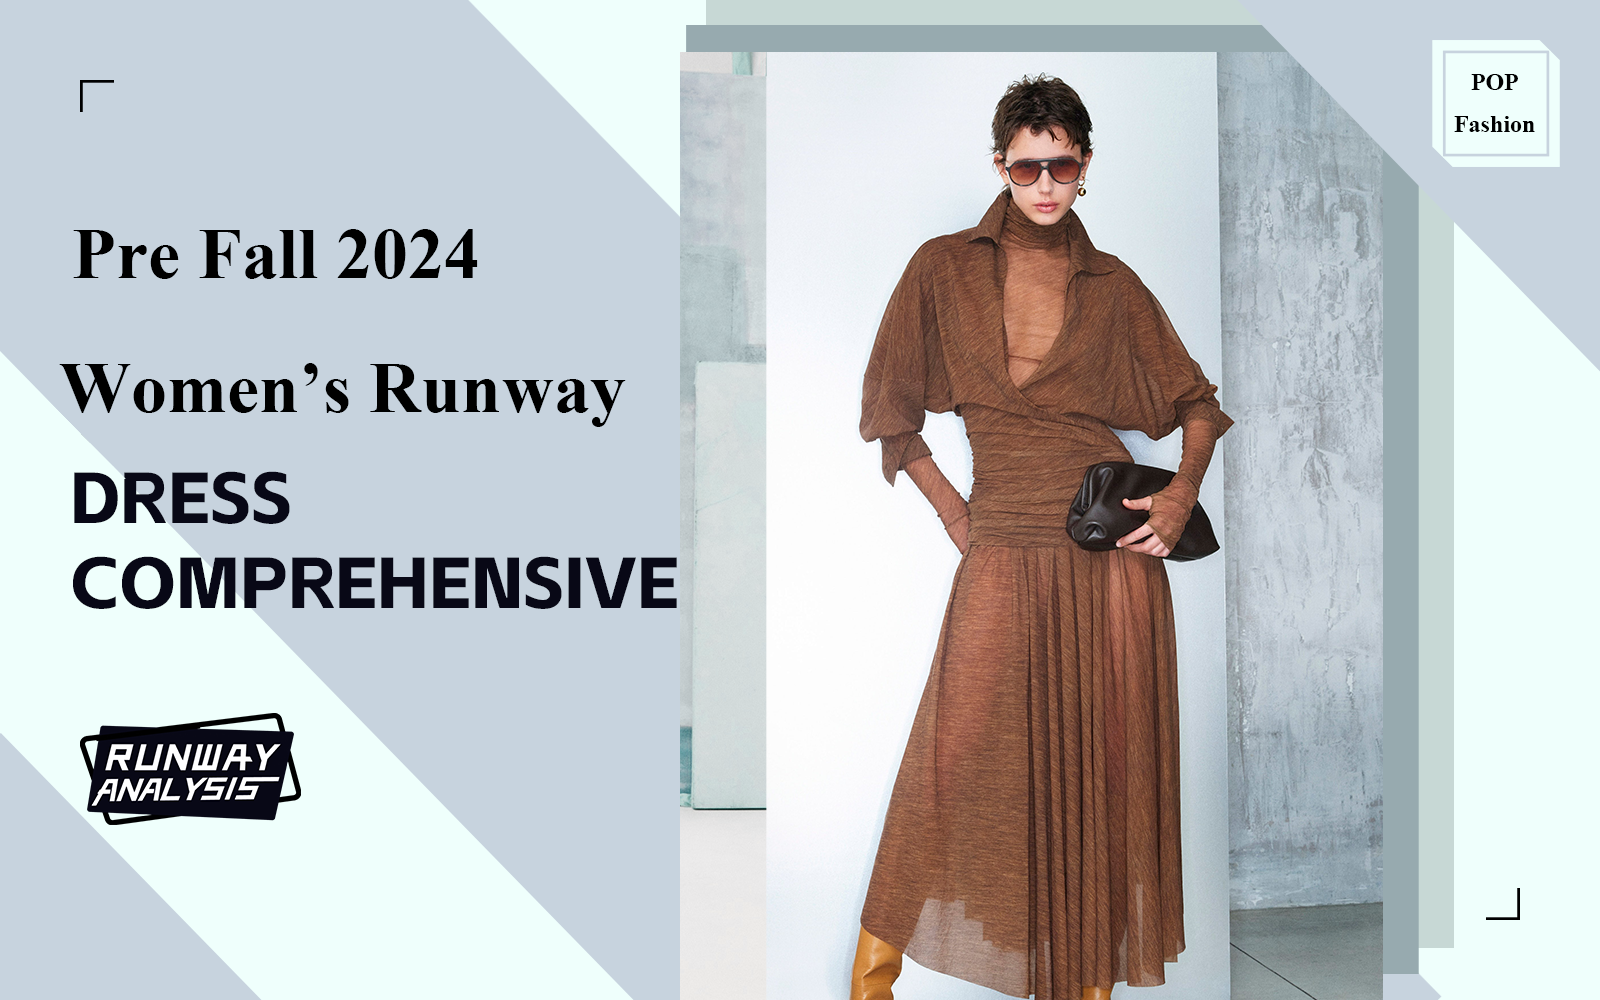 Dress -- Pre Fall 2024 Comprehensive Analysis of Women's Runway